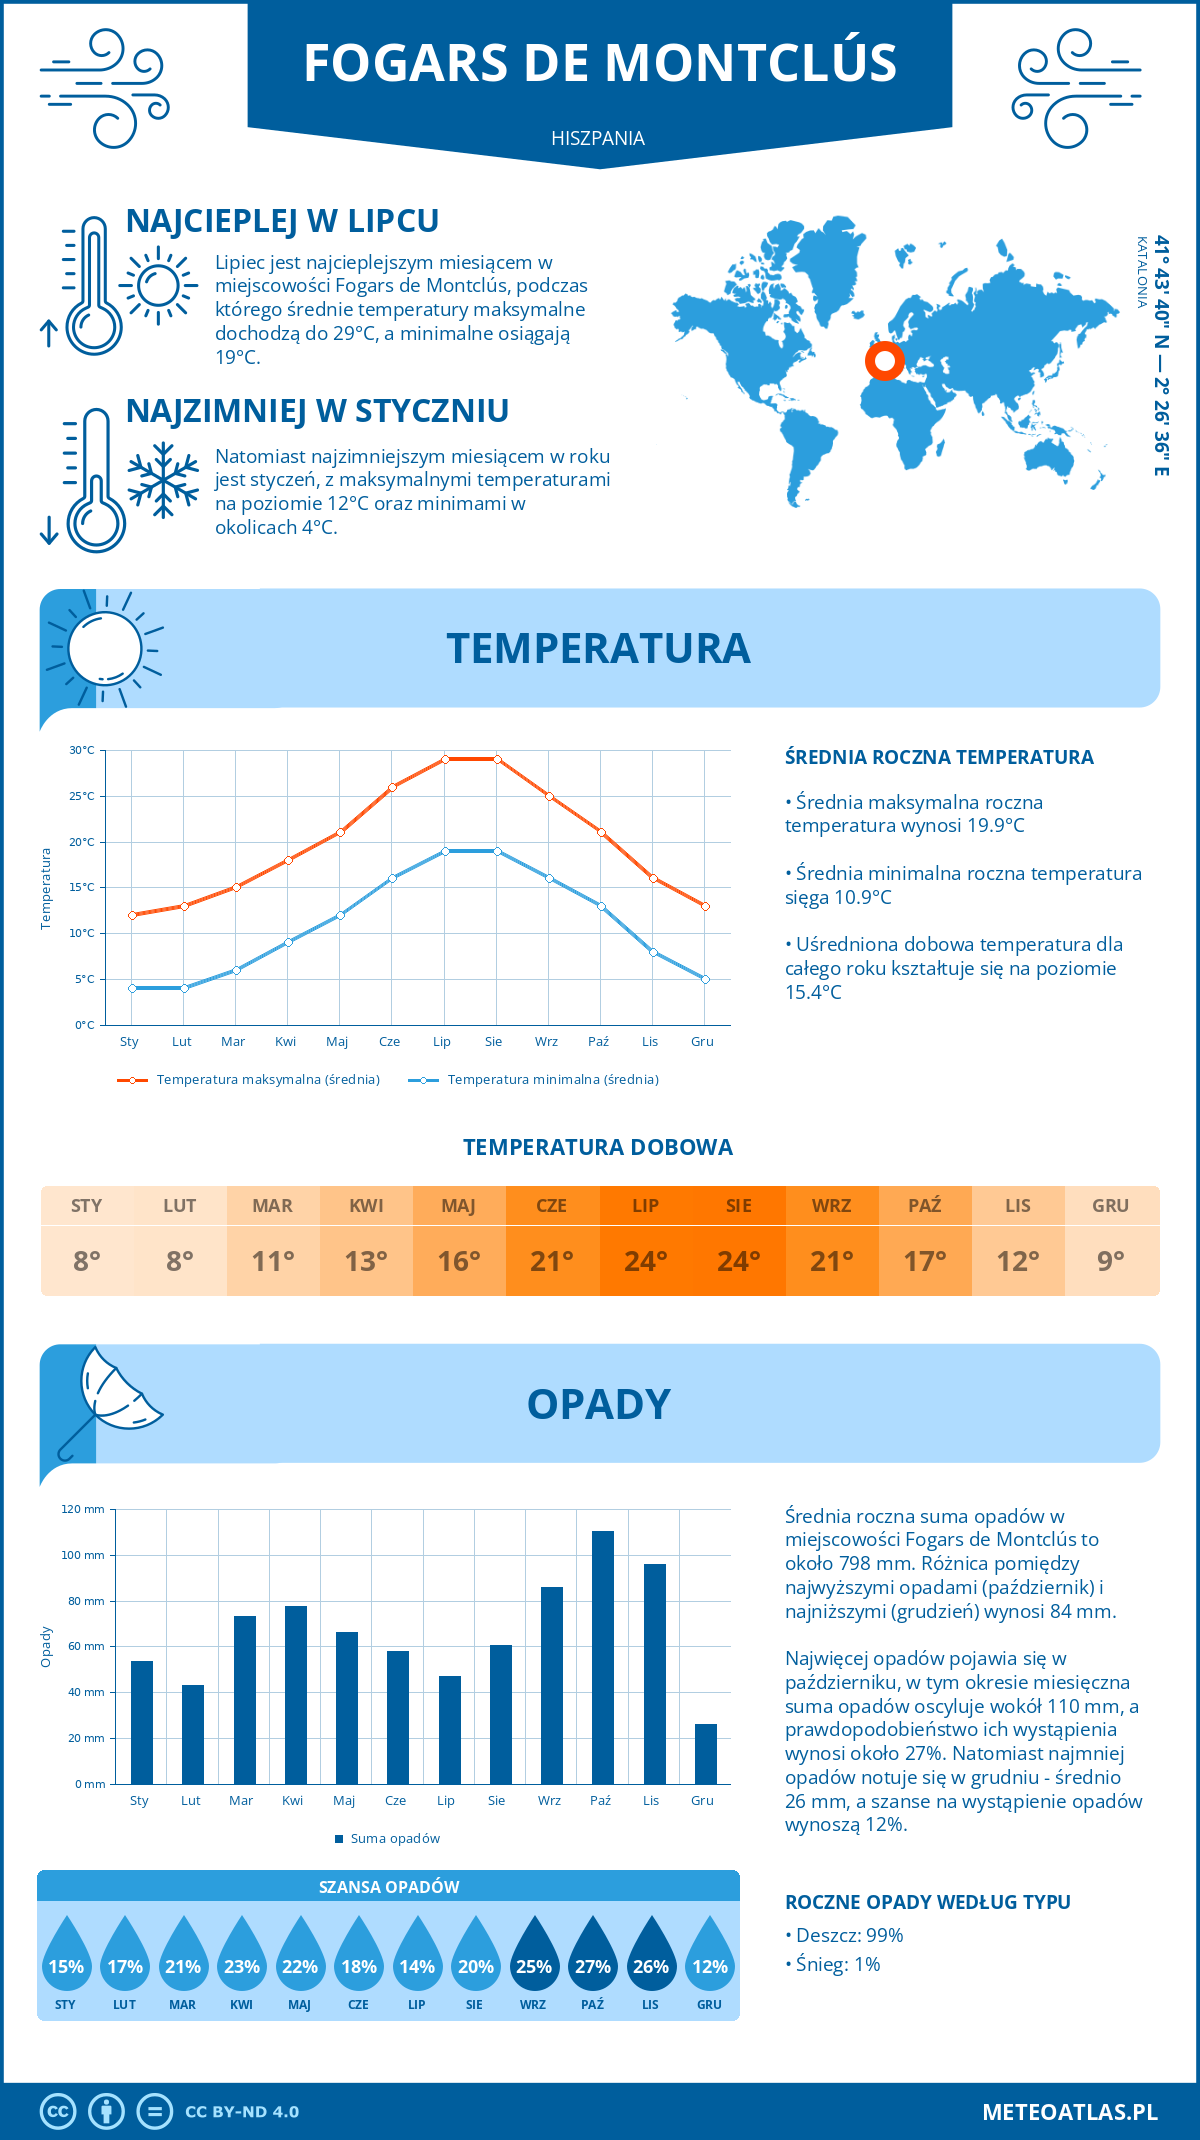 Pogoda Fogars de Montclús (Hiszpania). Temperatura oraz opady.